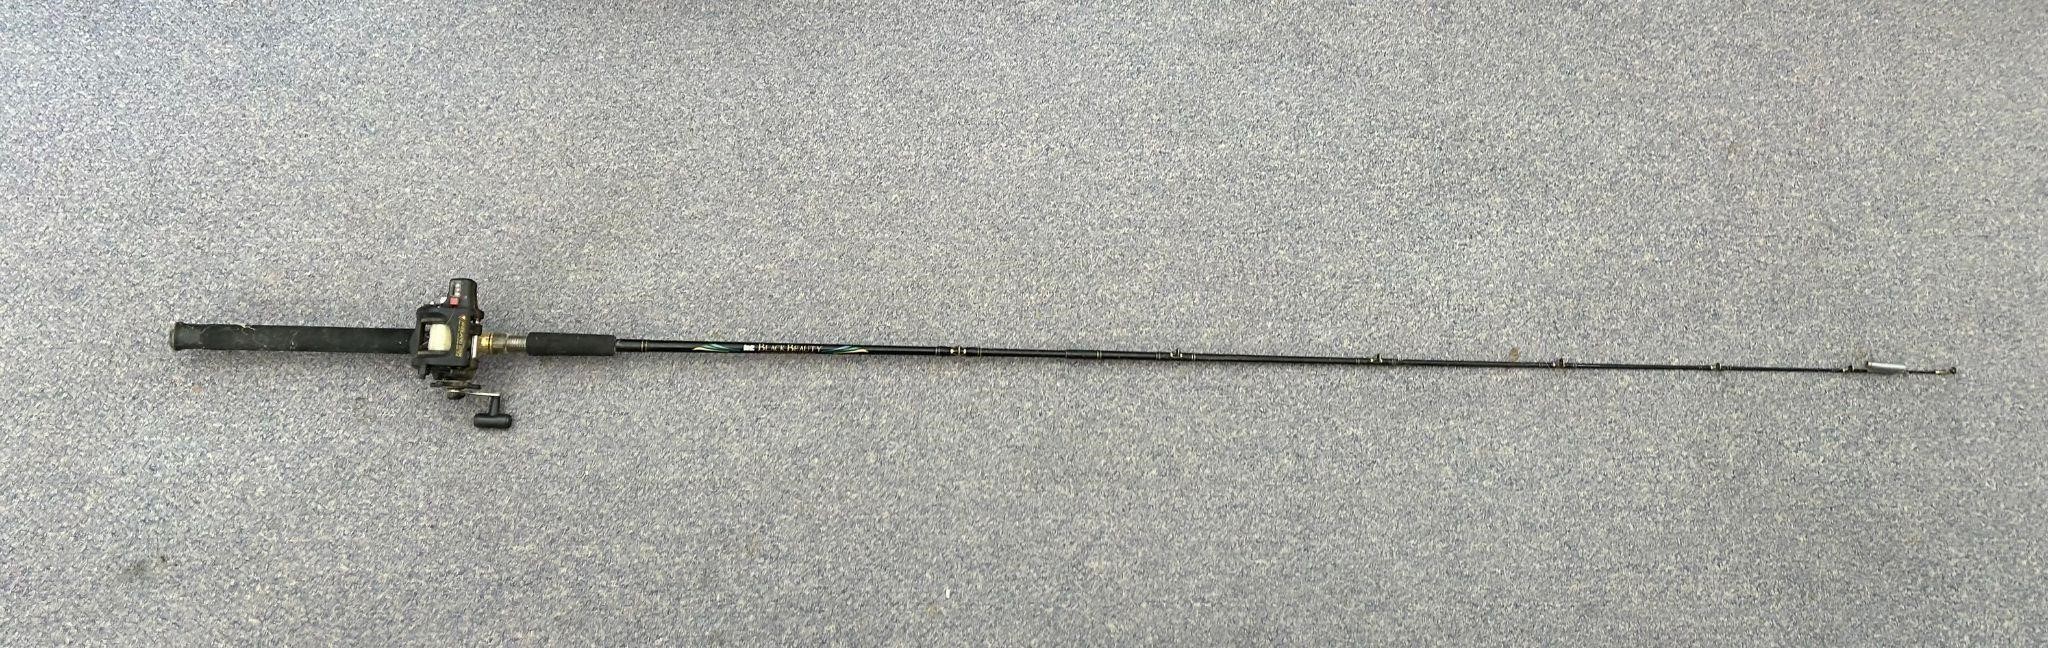 Vanguard Fishing Reel and Black Beauty Salmon Pole